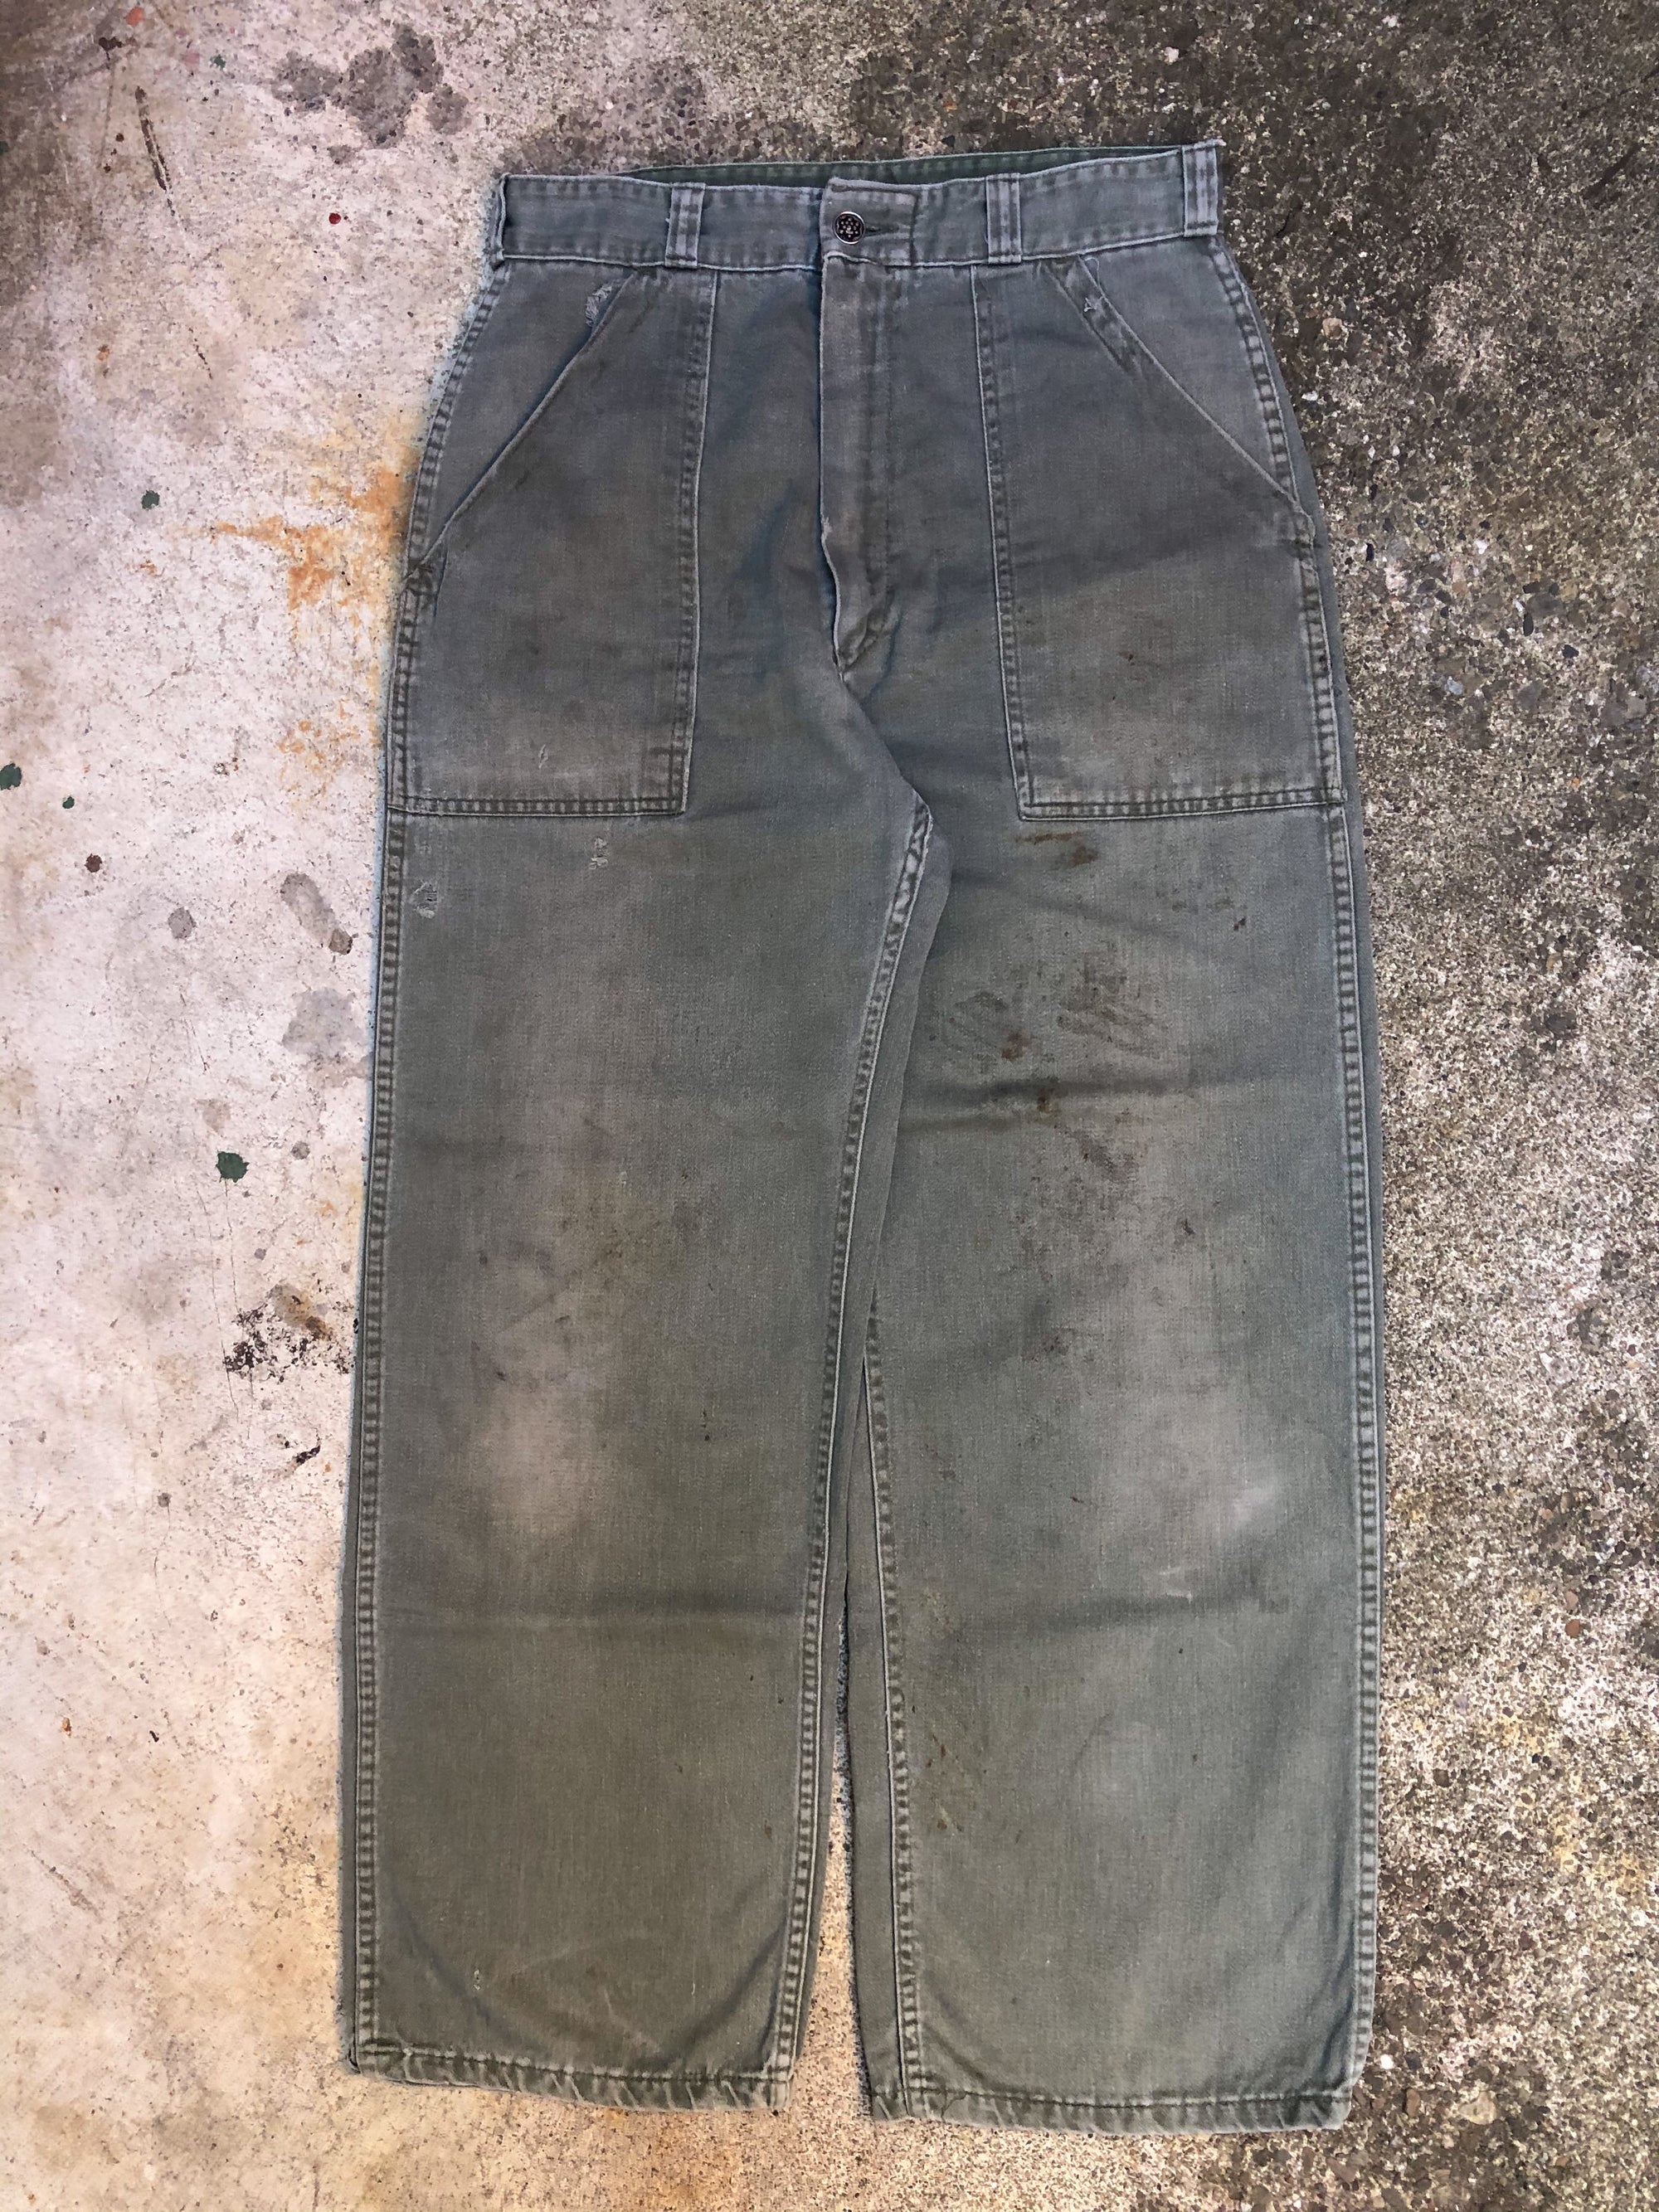 1960s Faded 13 Star OG 107 Military Pants (28X26)